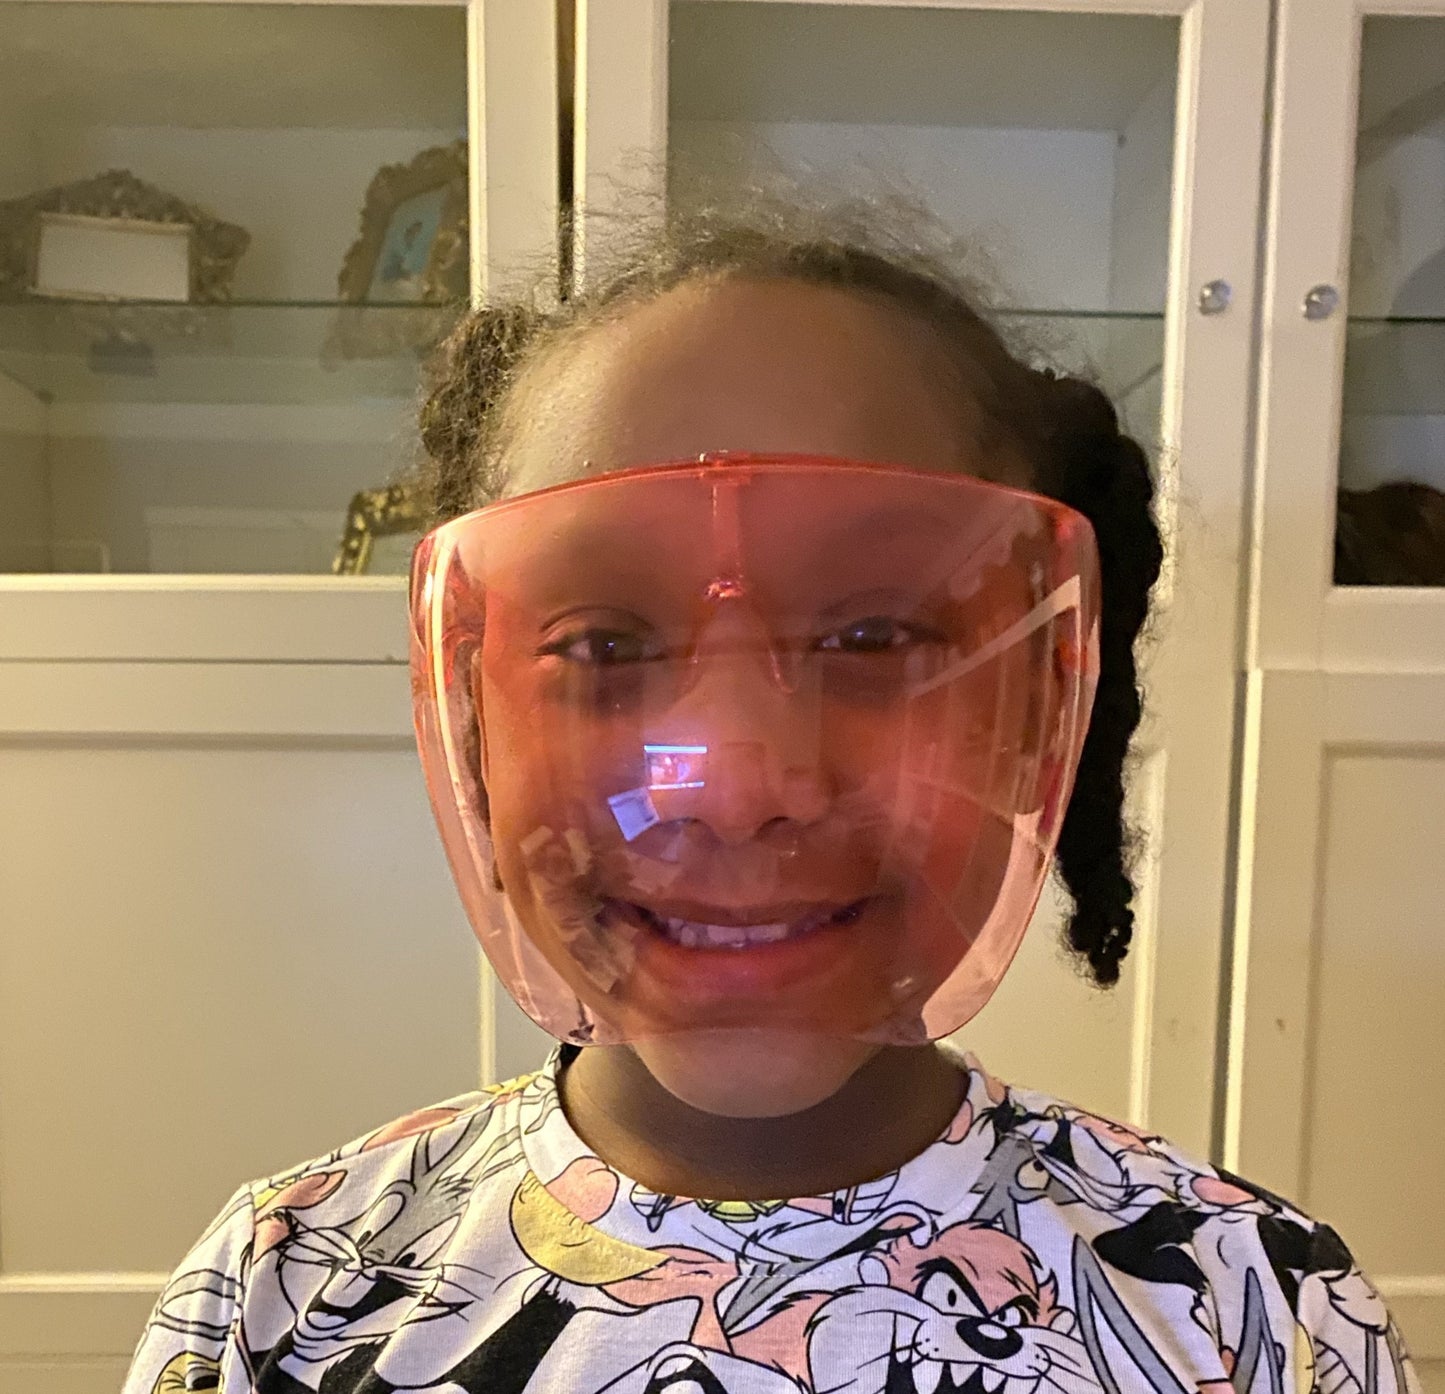 Kids Dome Face Shield Mask